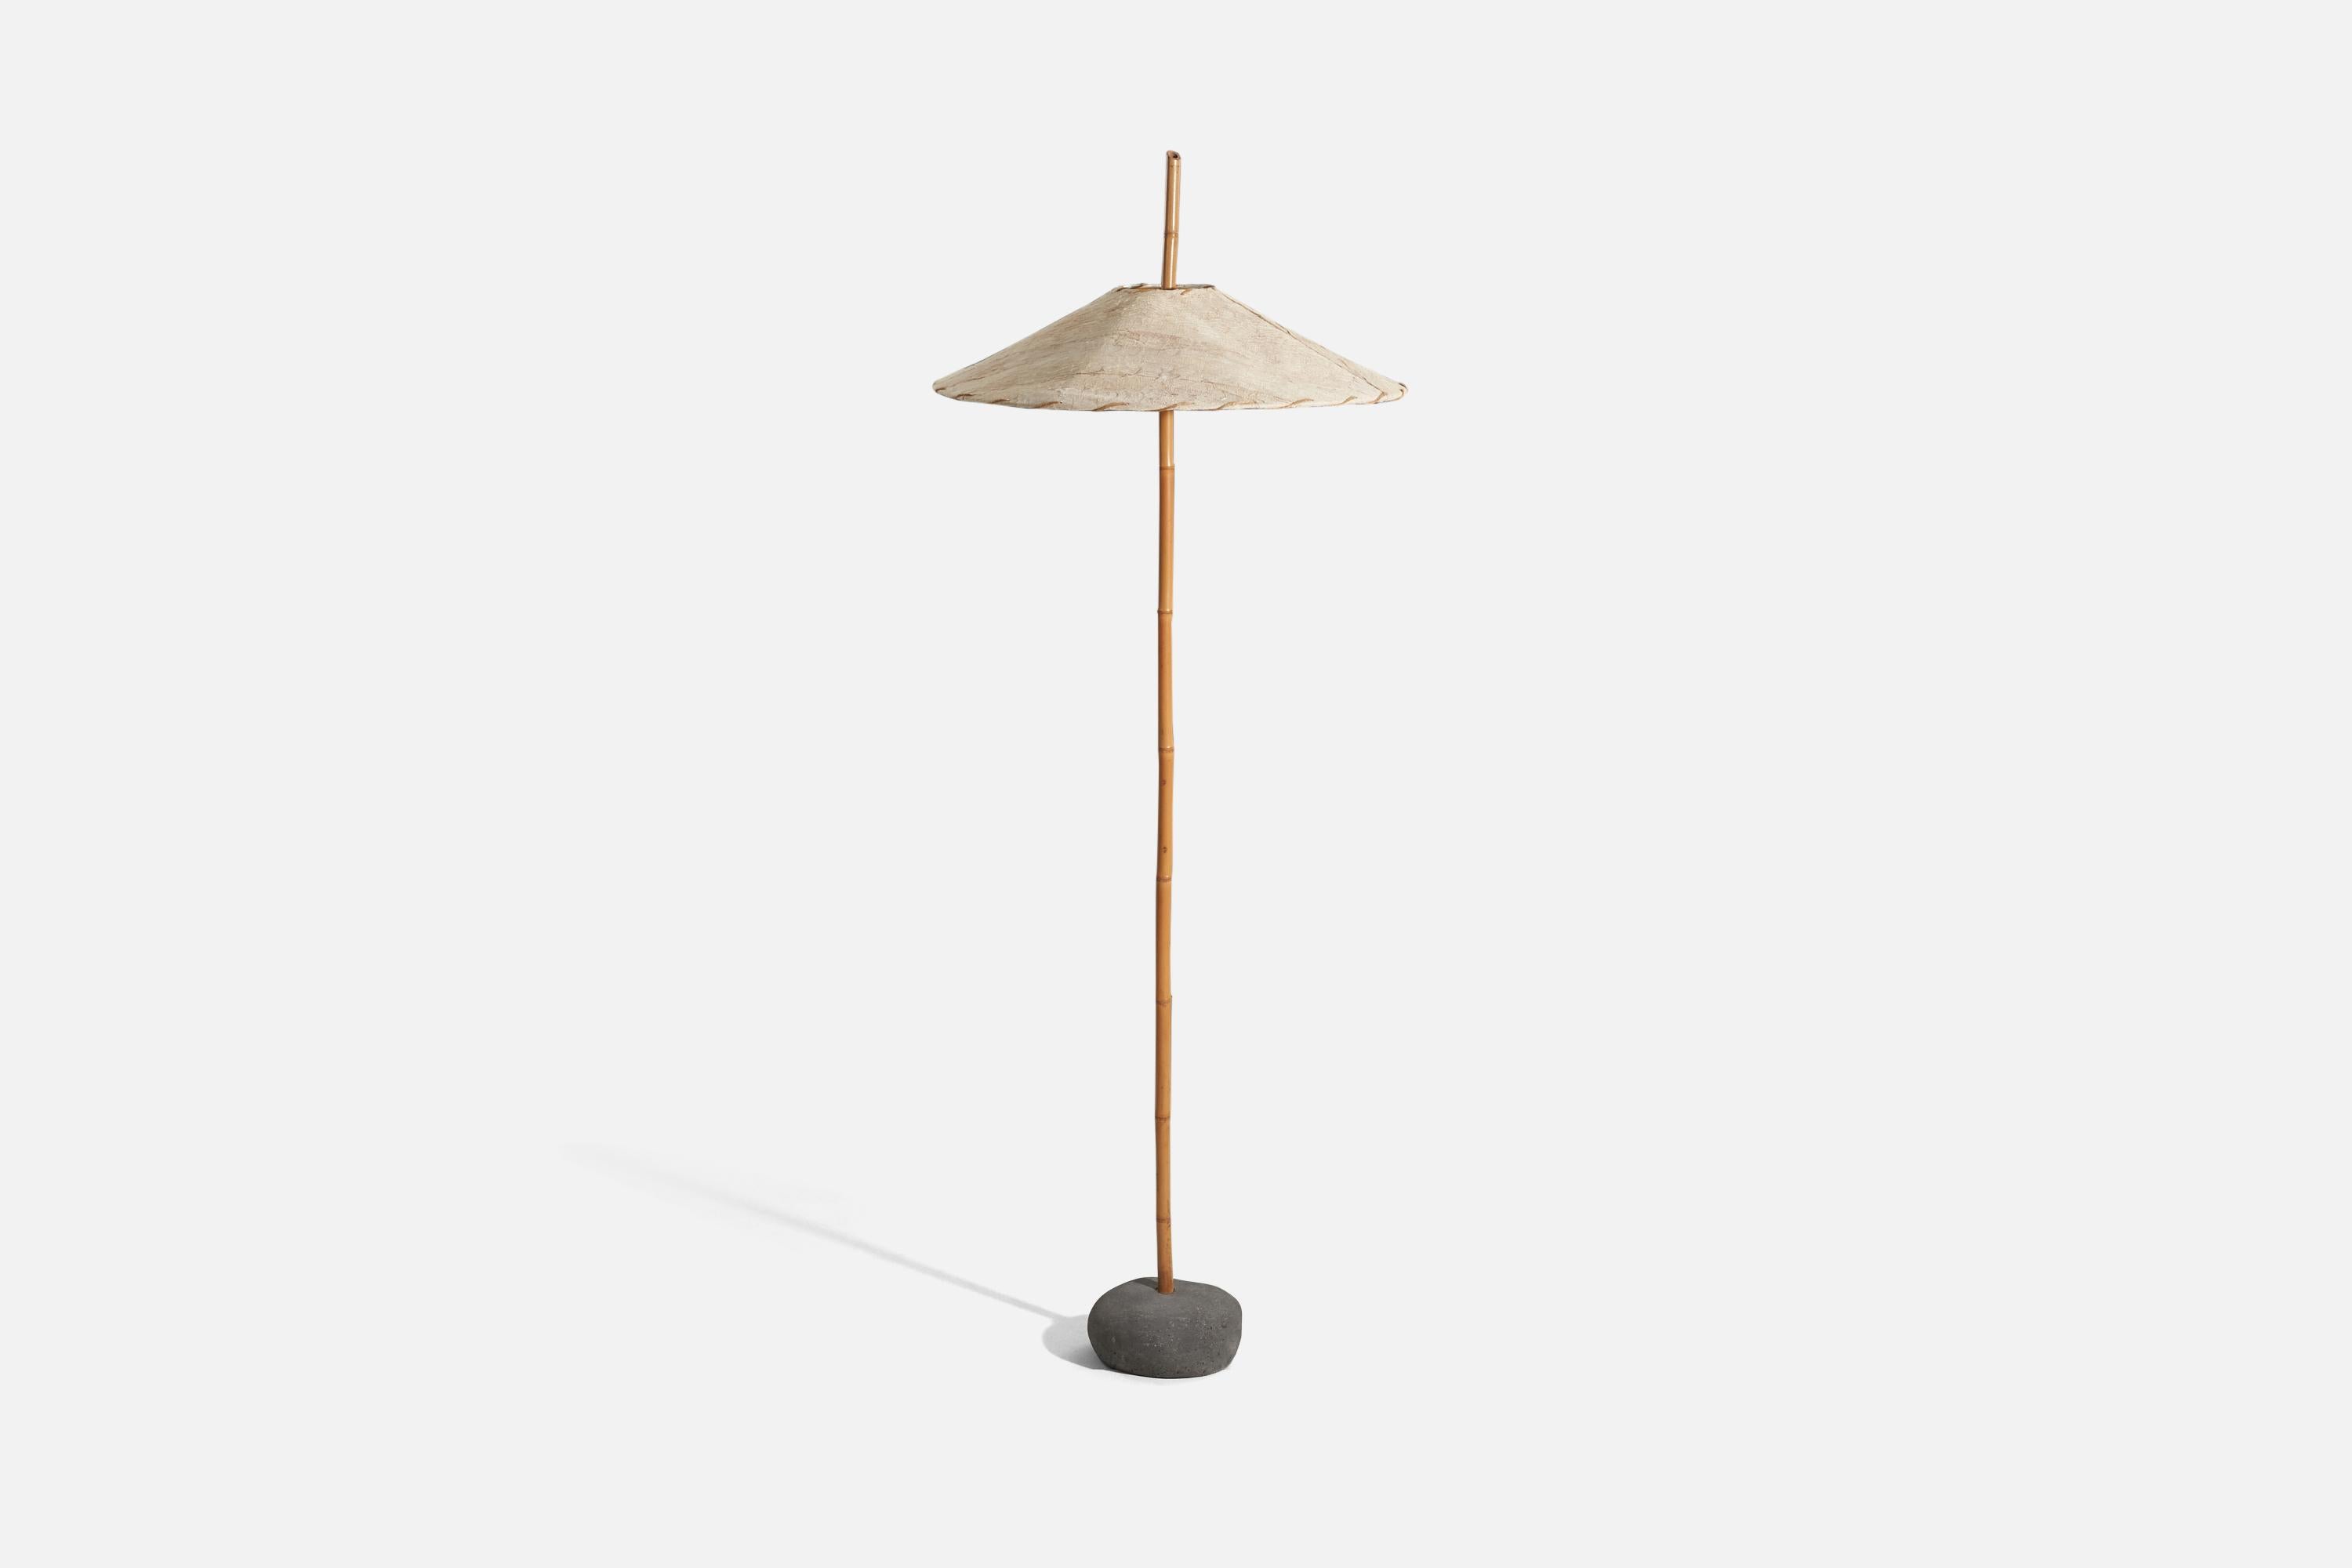 A floor lamp, designed by Robert Sonneman for his 